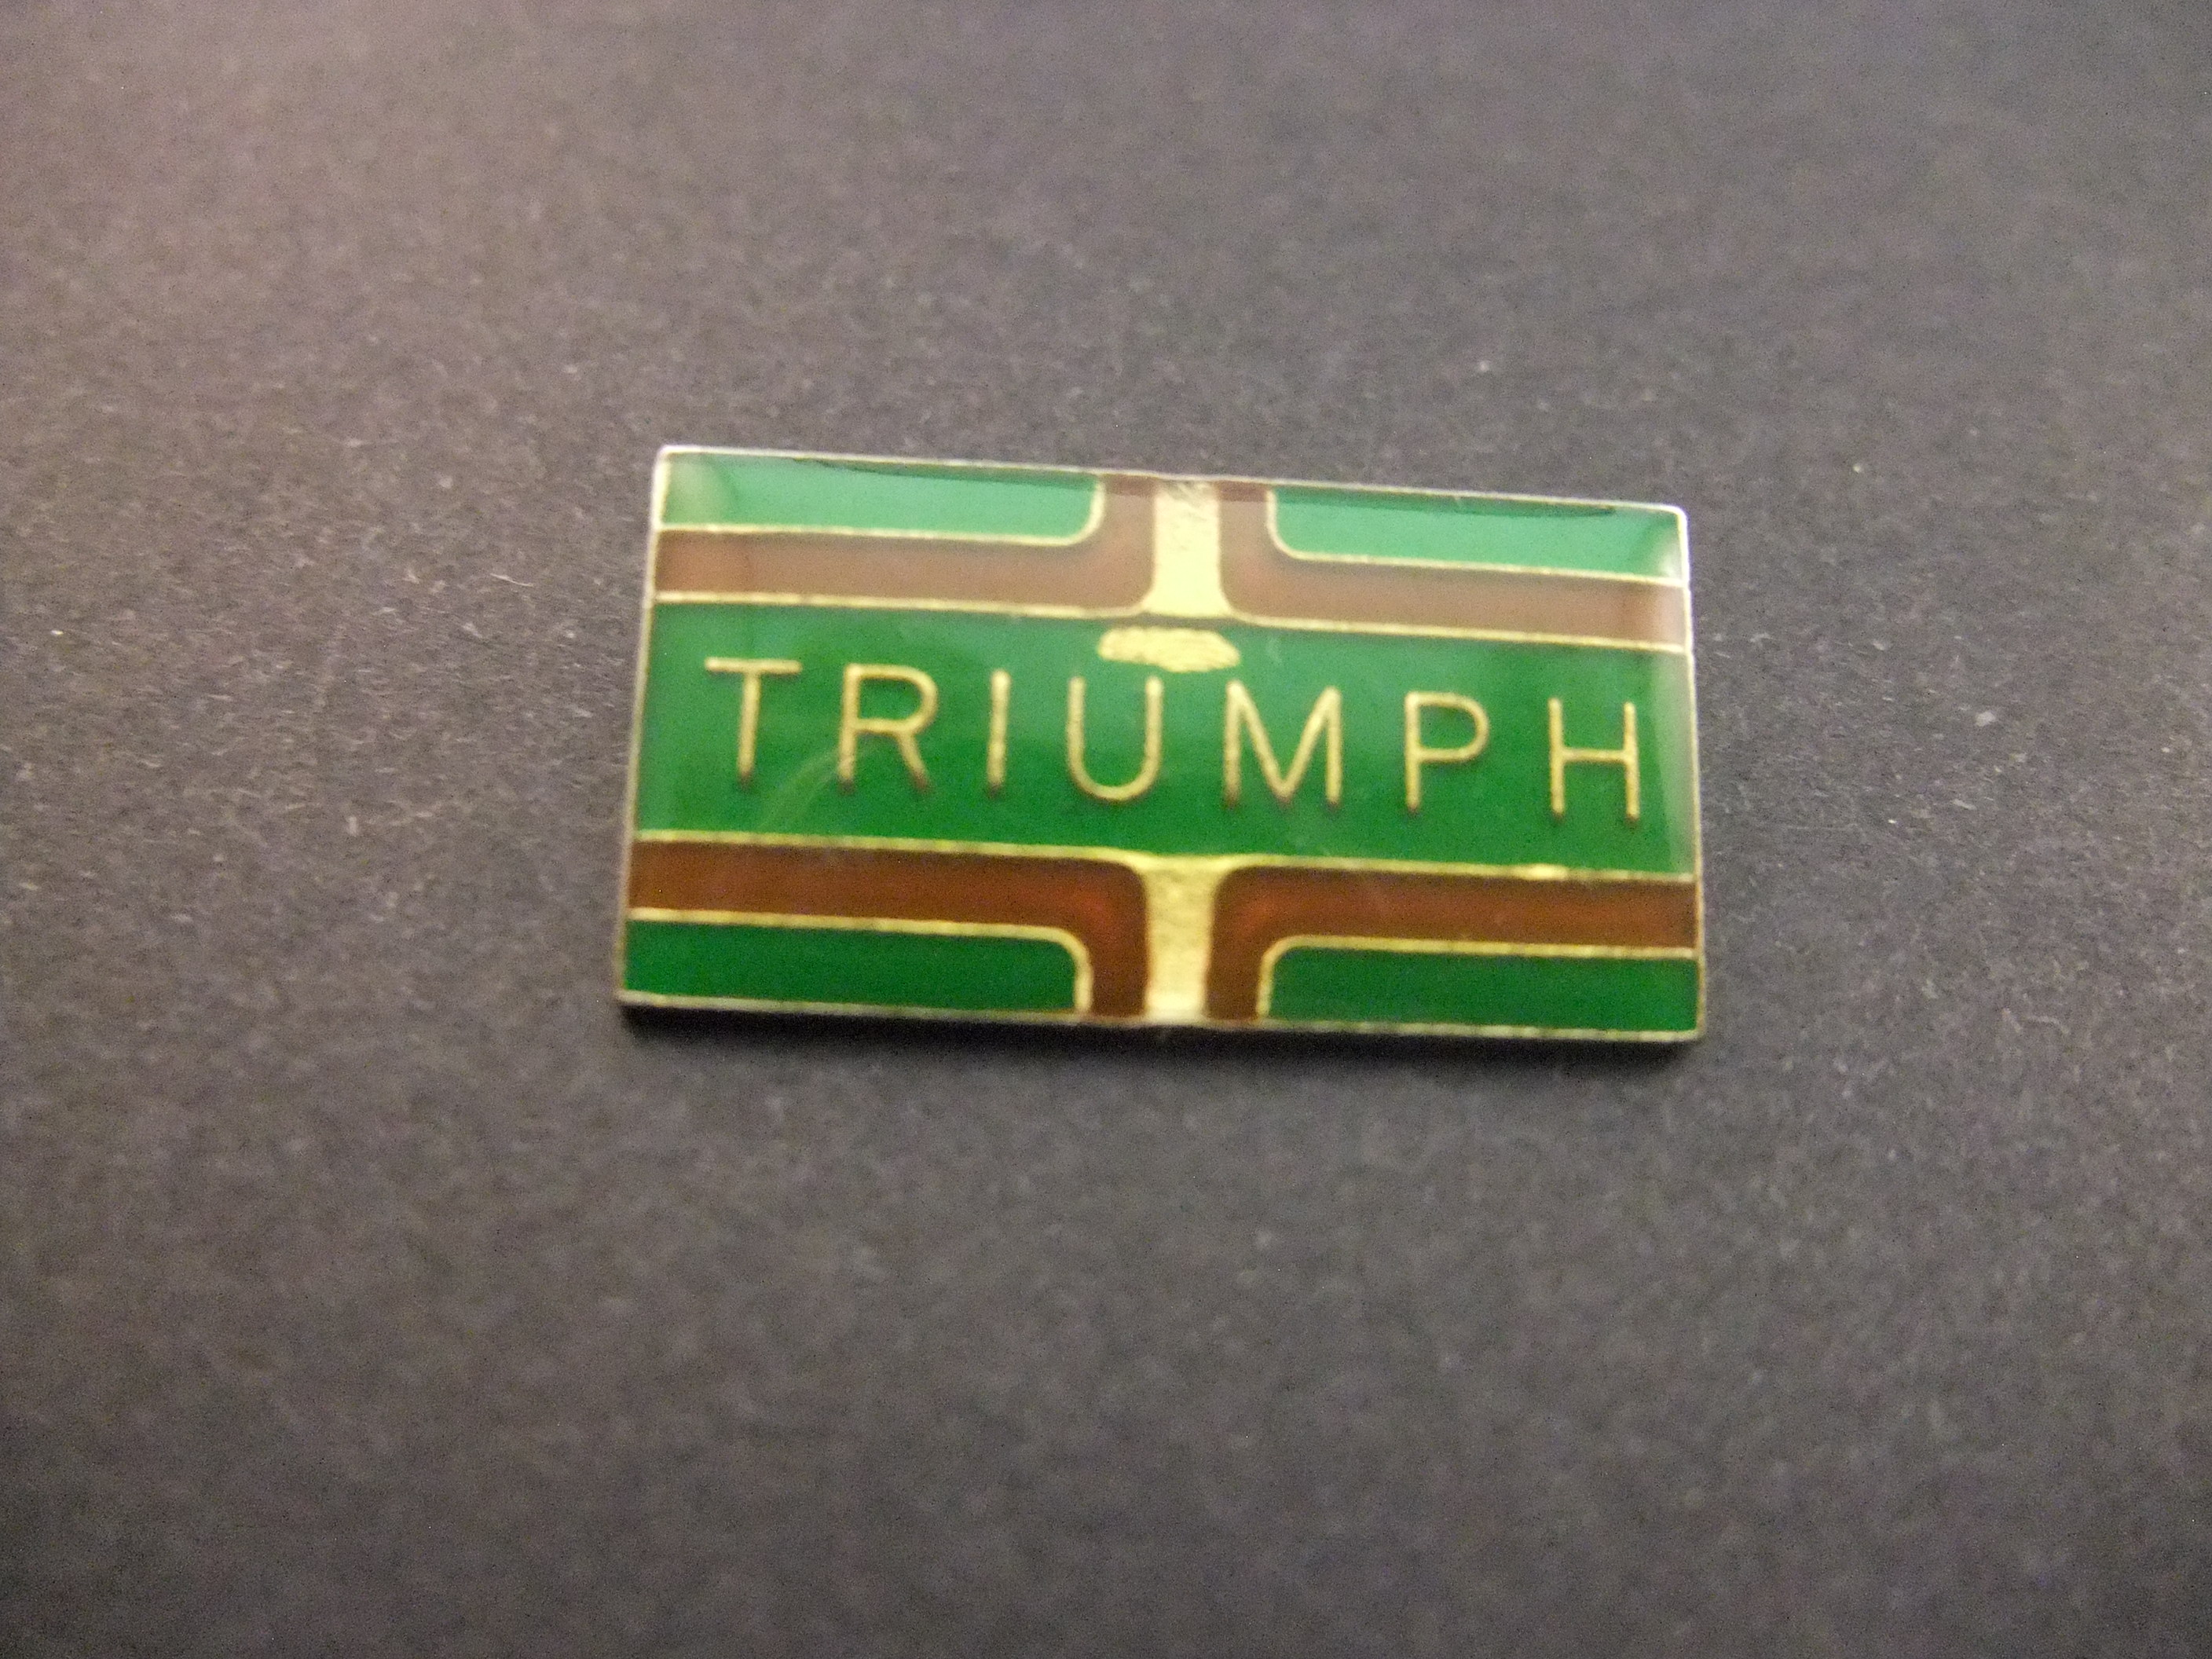 Triumph auto of motor logo